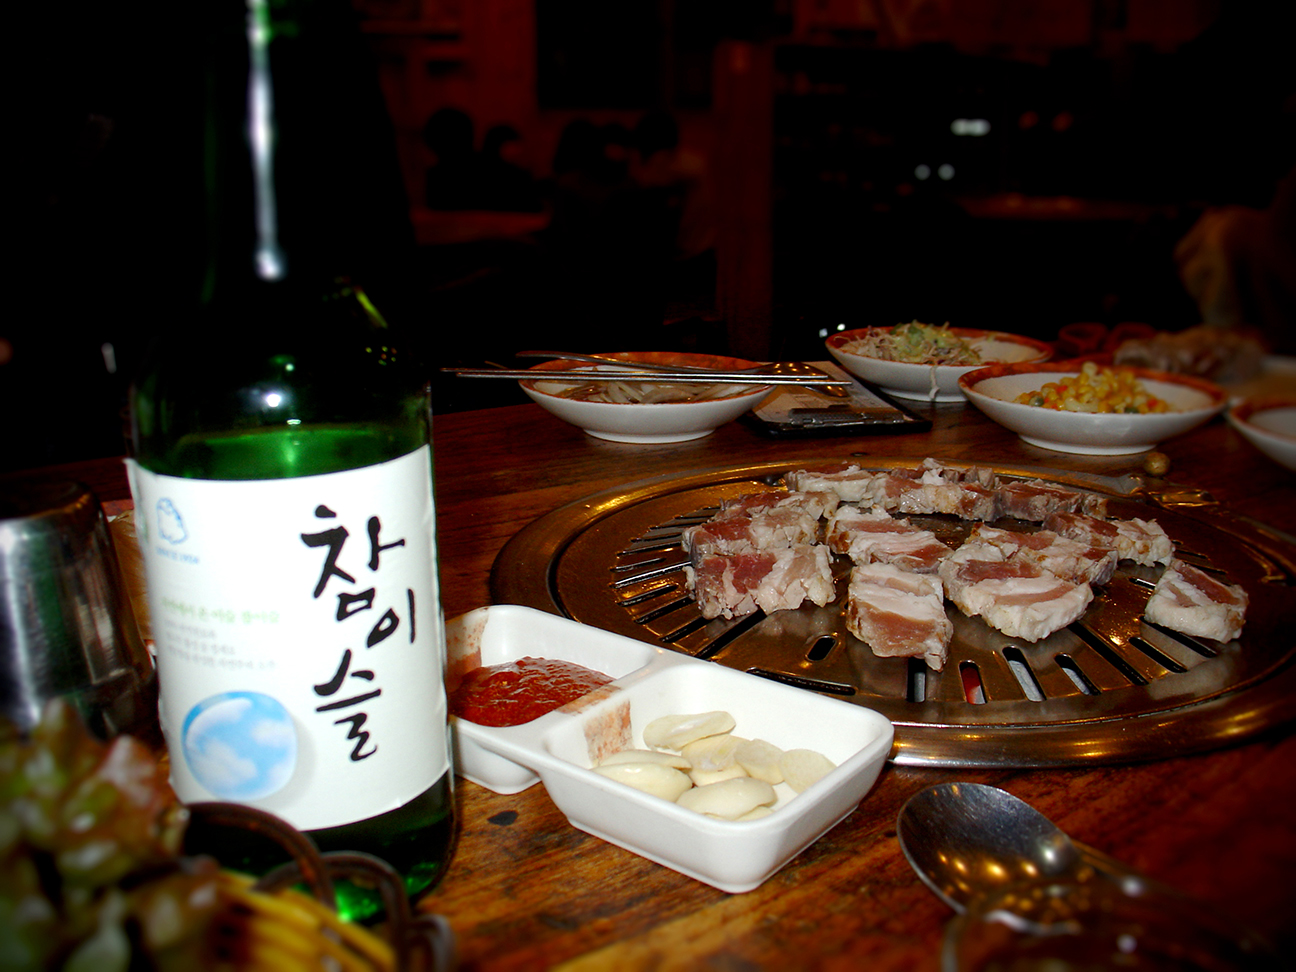 Soju (소주) and Samgyeopsal (삼겹살)